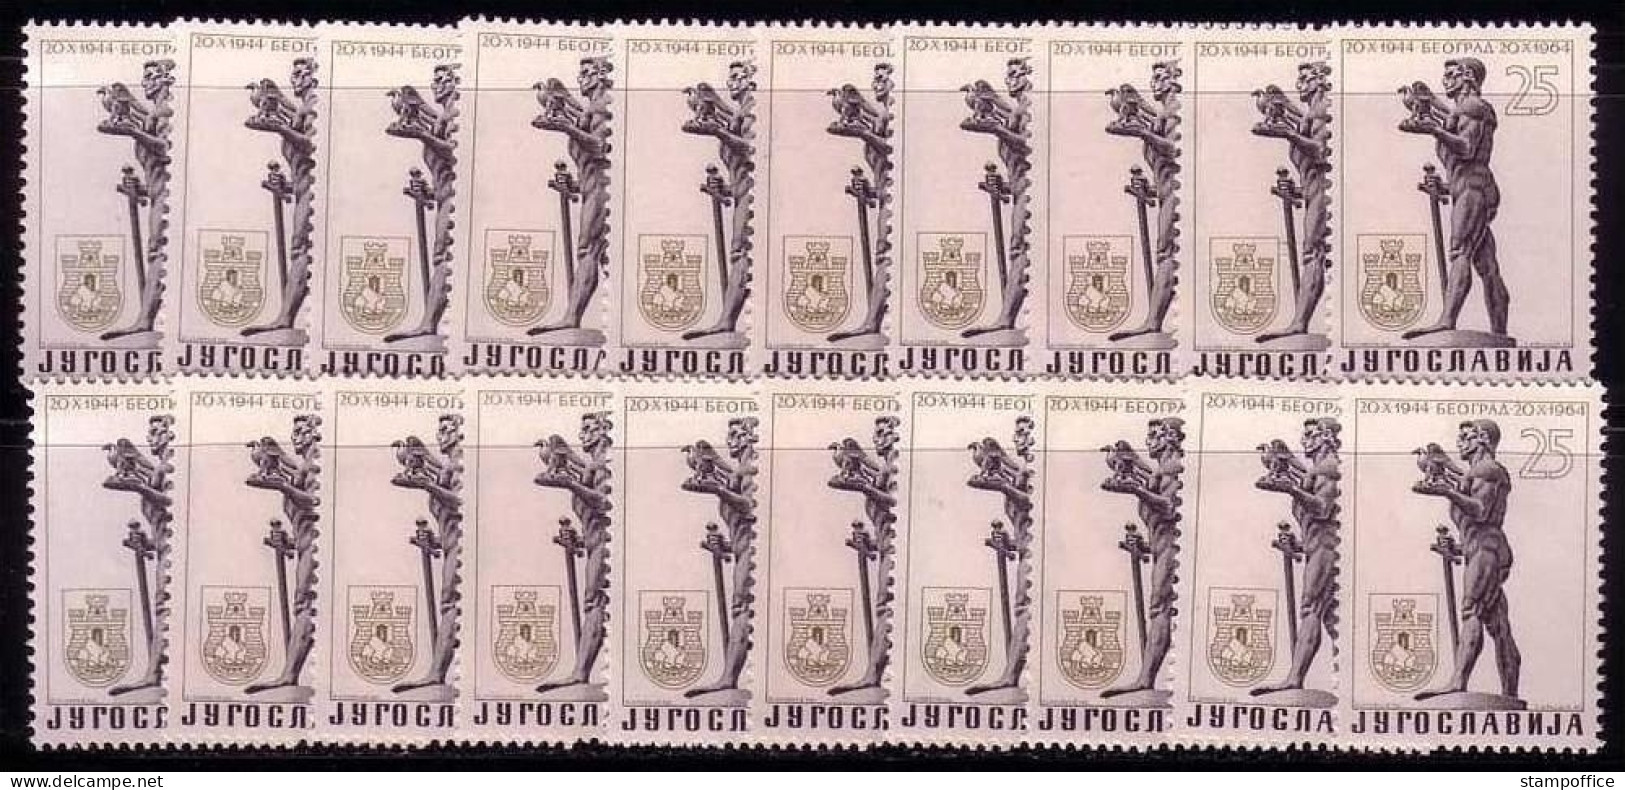 JUGOSLAWIEN 20 X MI-NR. 1094 POSTFRISCH(MINT) BEFREIUNG BELGRADS - STADTWAPPEN - Postzegels